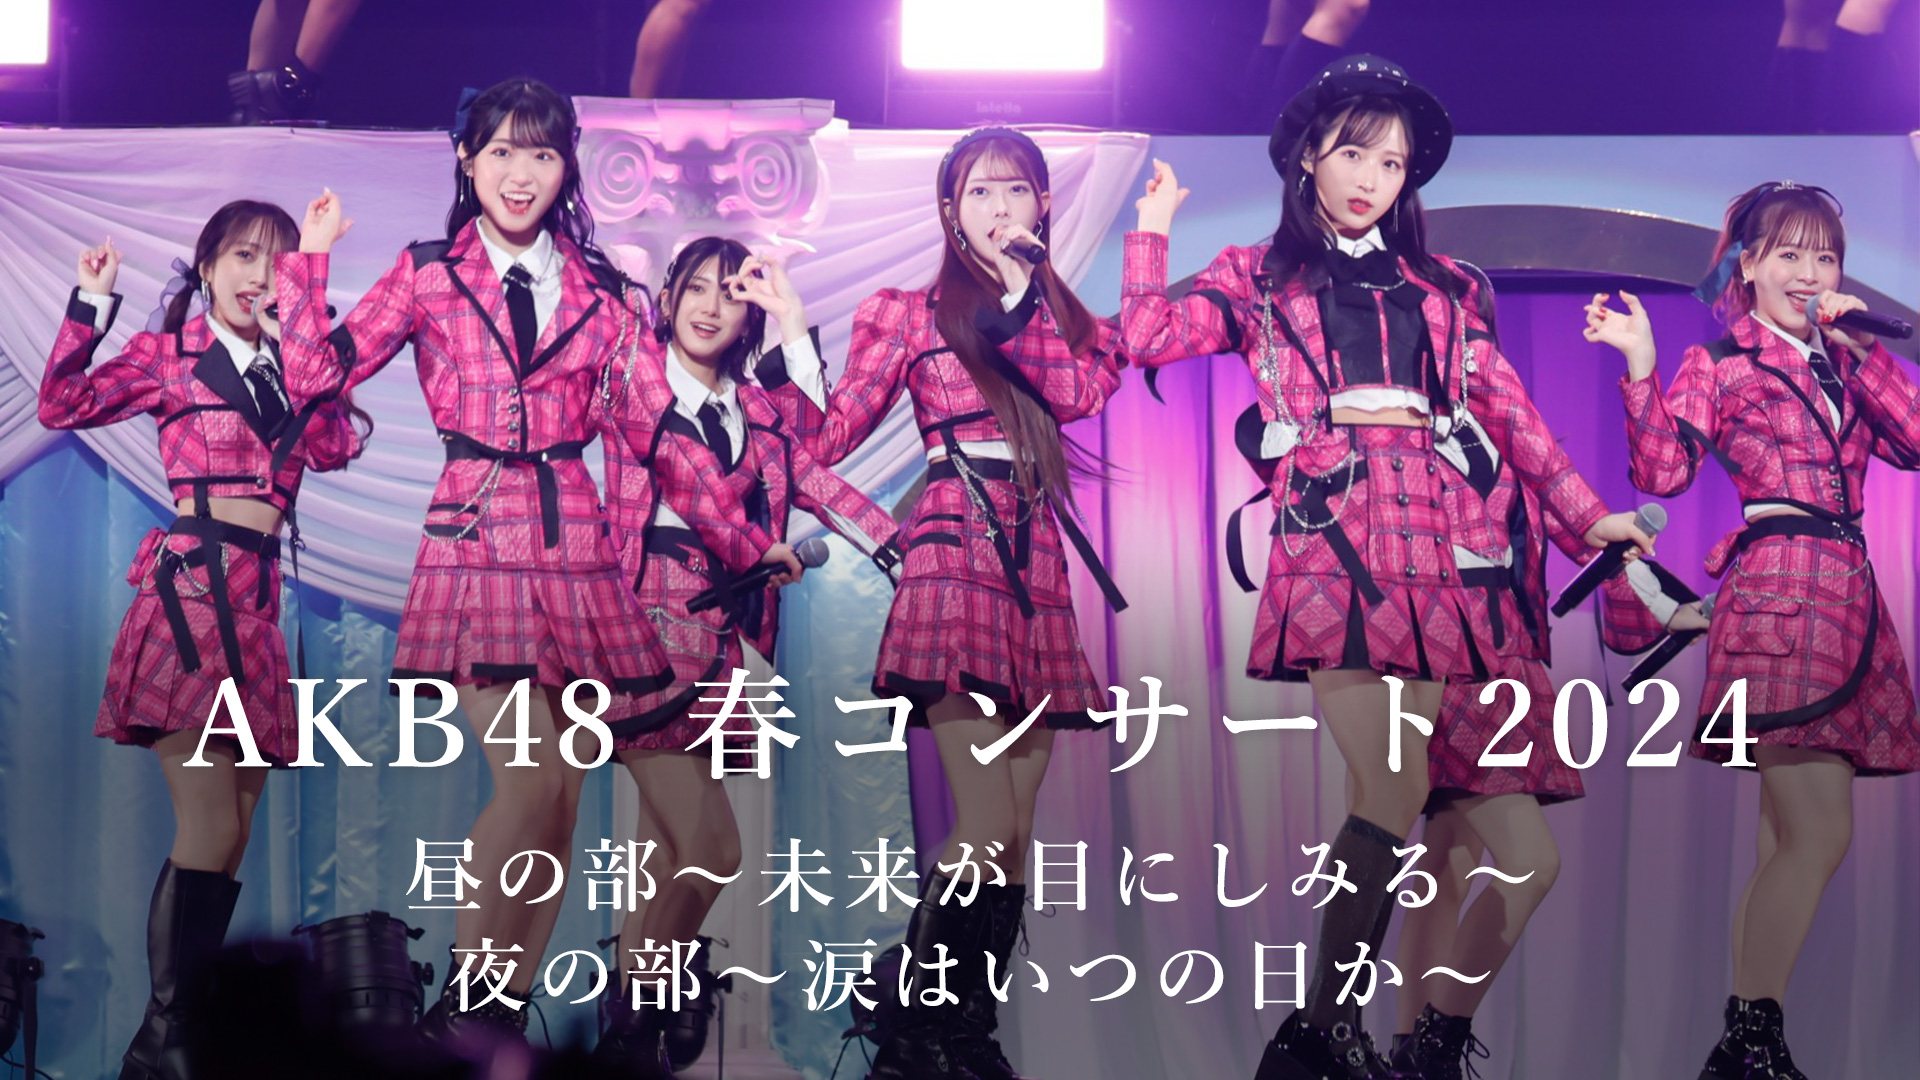 AKB48春季演唱会2024 日本演唱会时间及门票详情- Chengkok成都